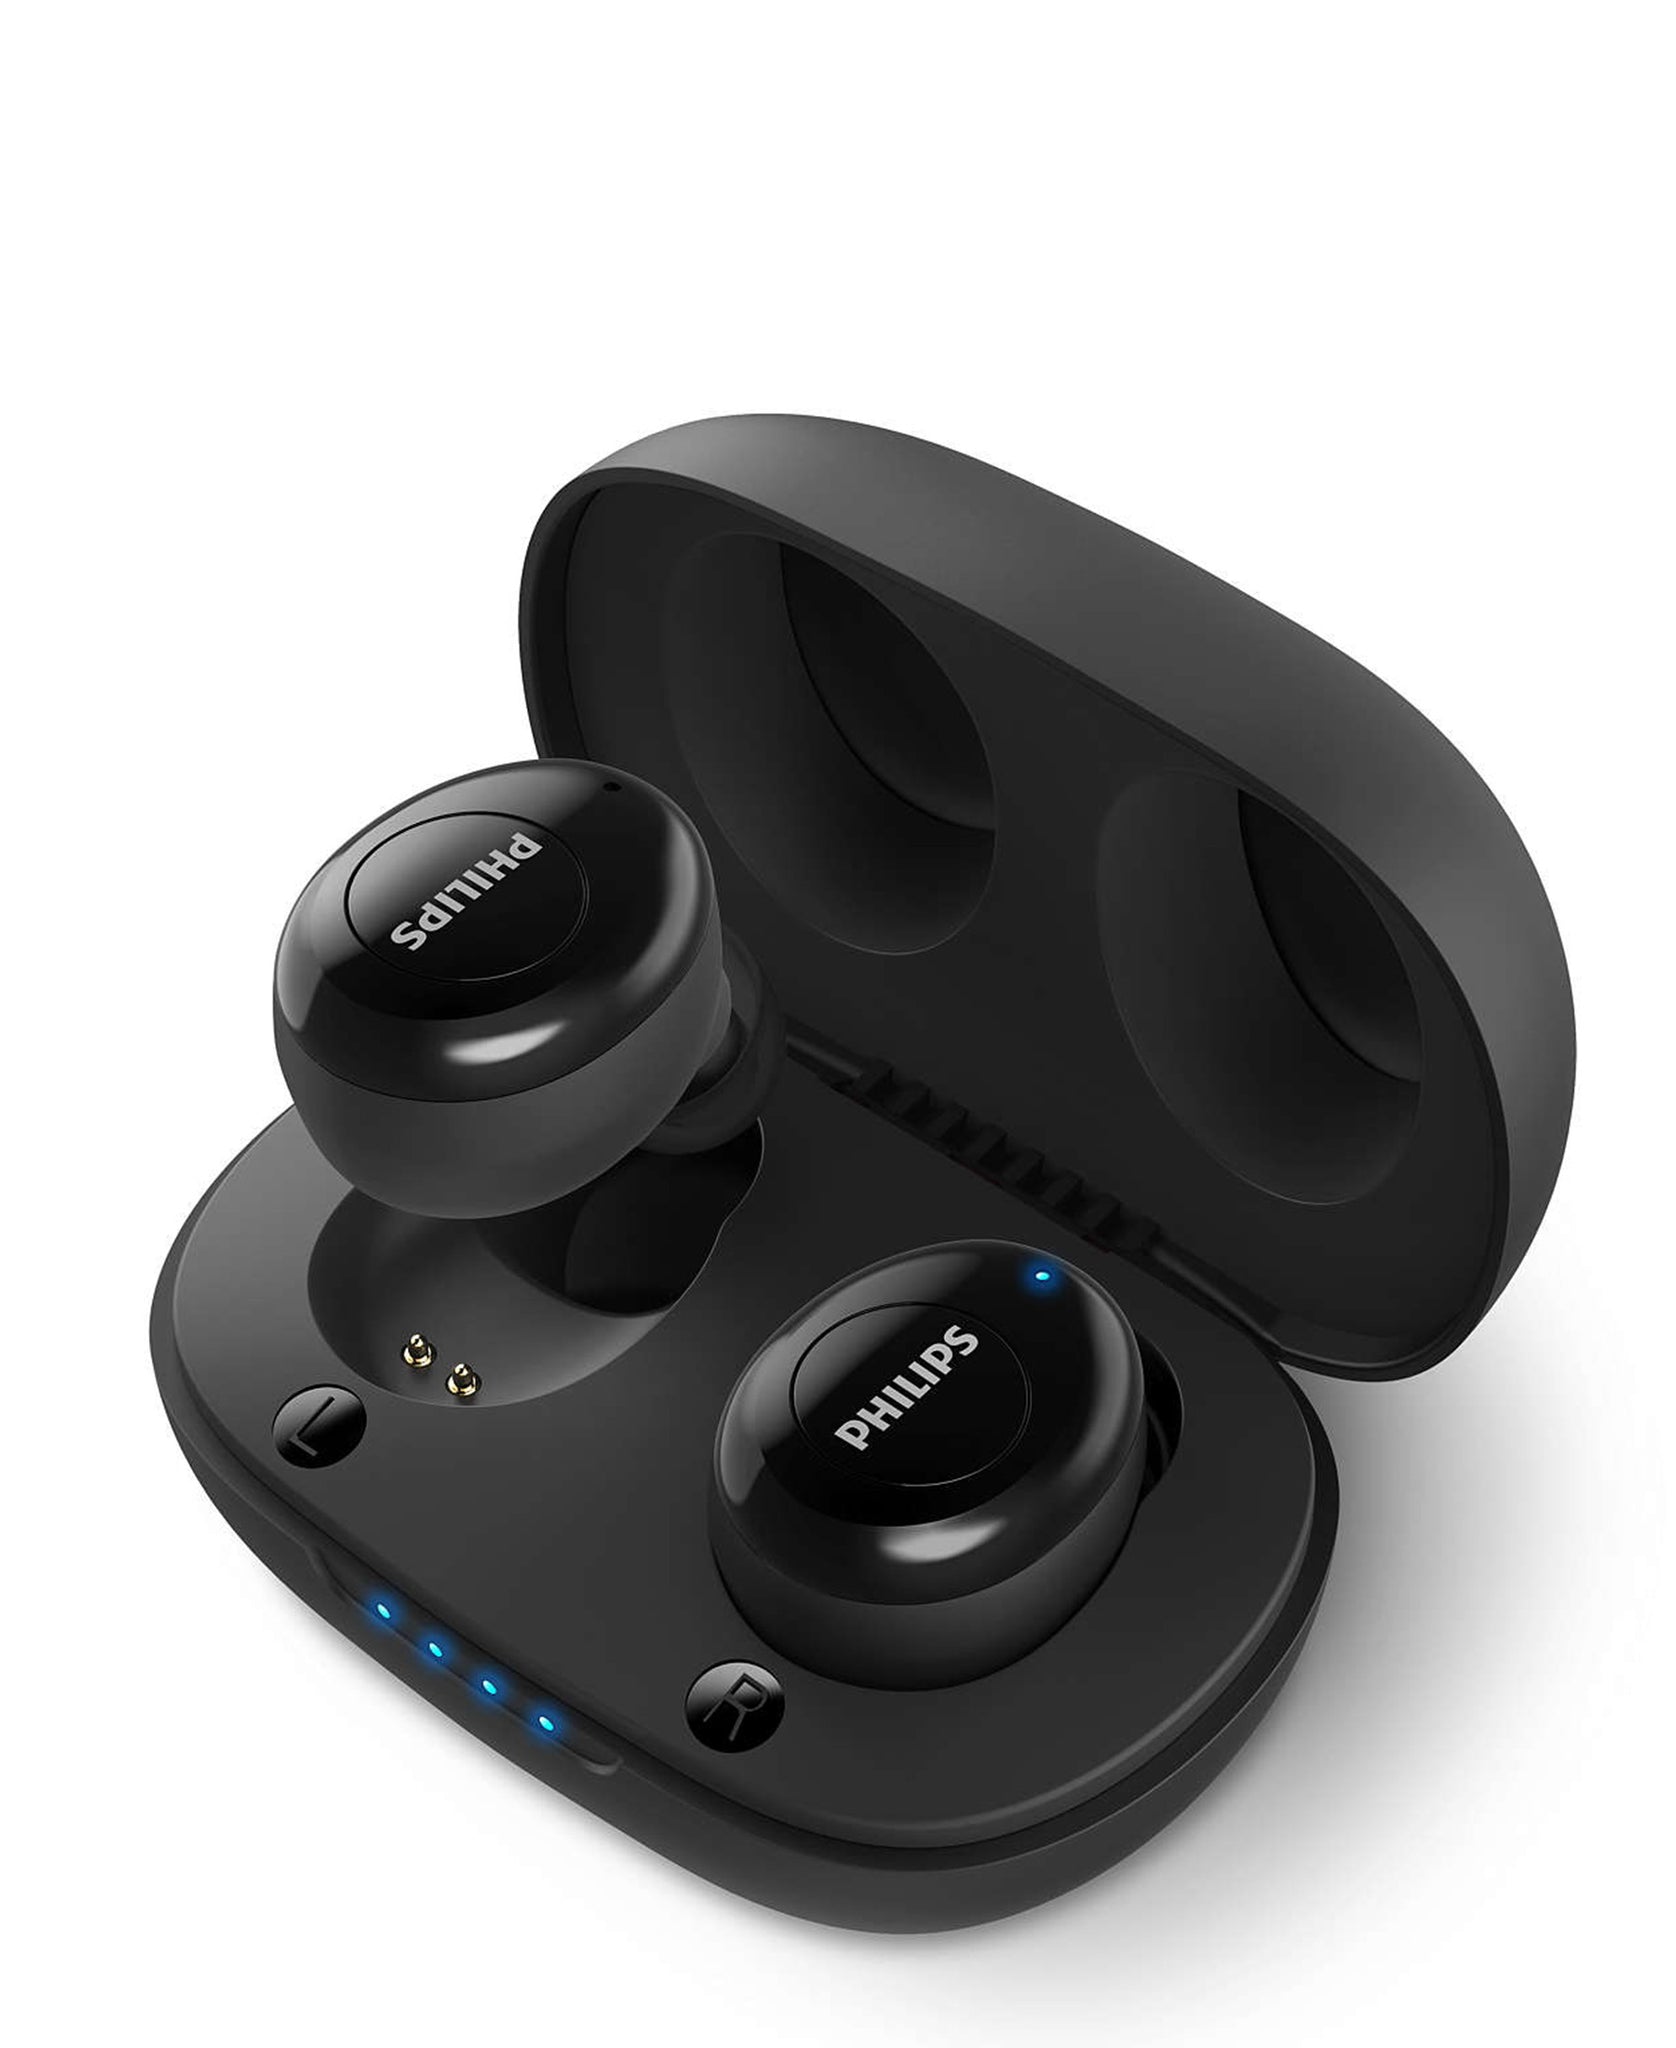 Philips UpBeat True Wireless In-Ear Headphones - Black